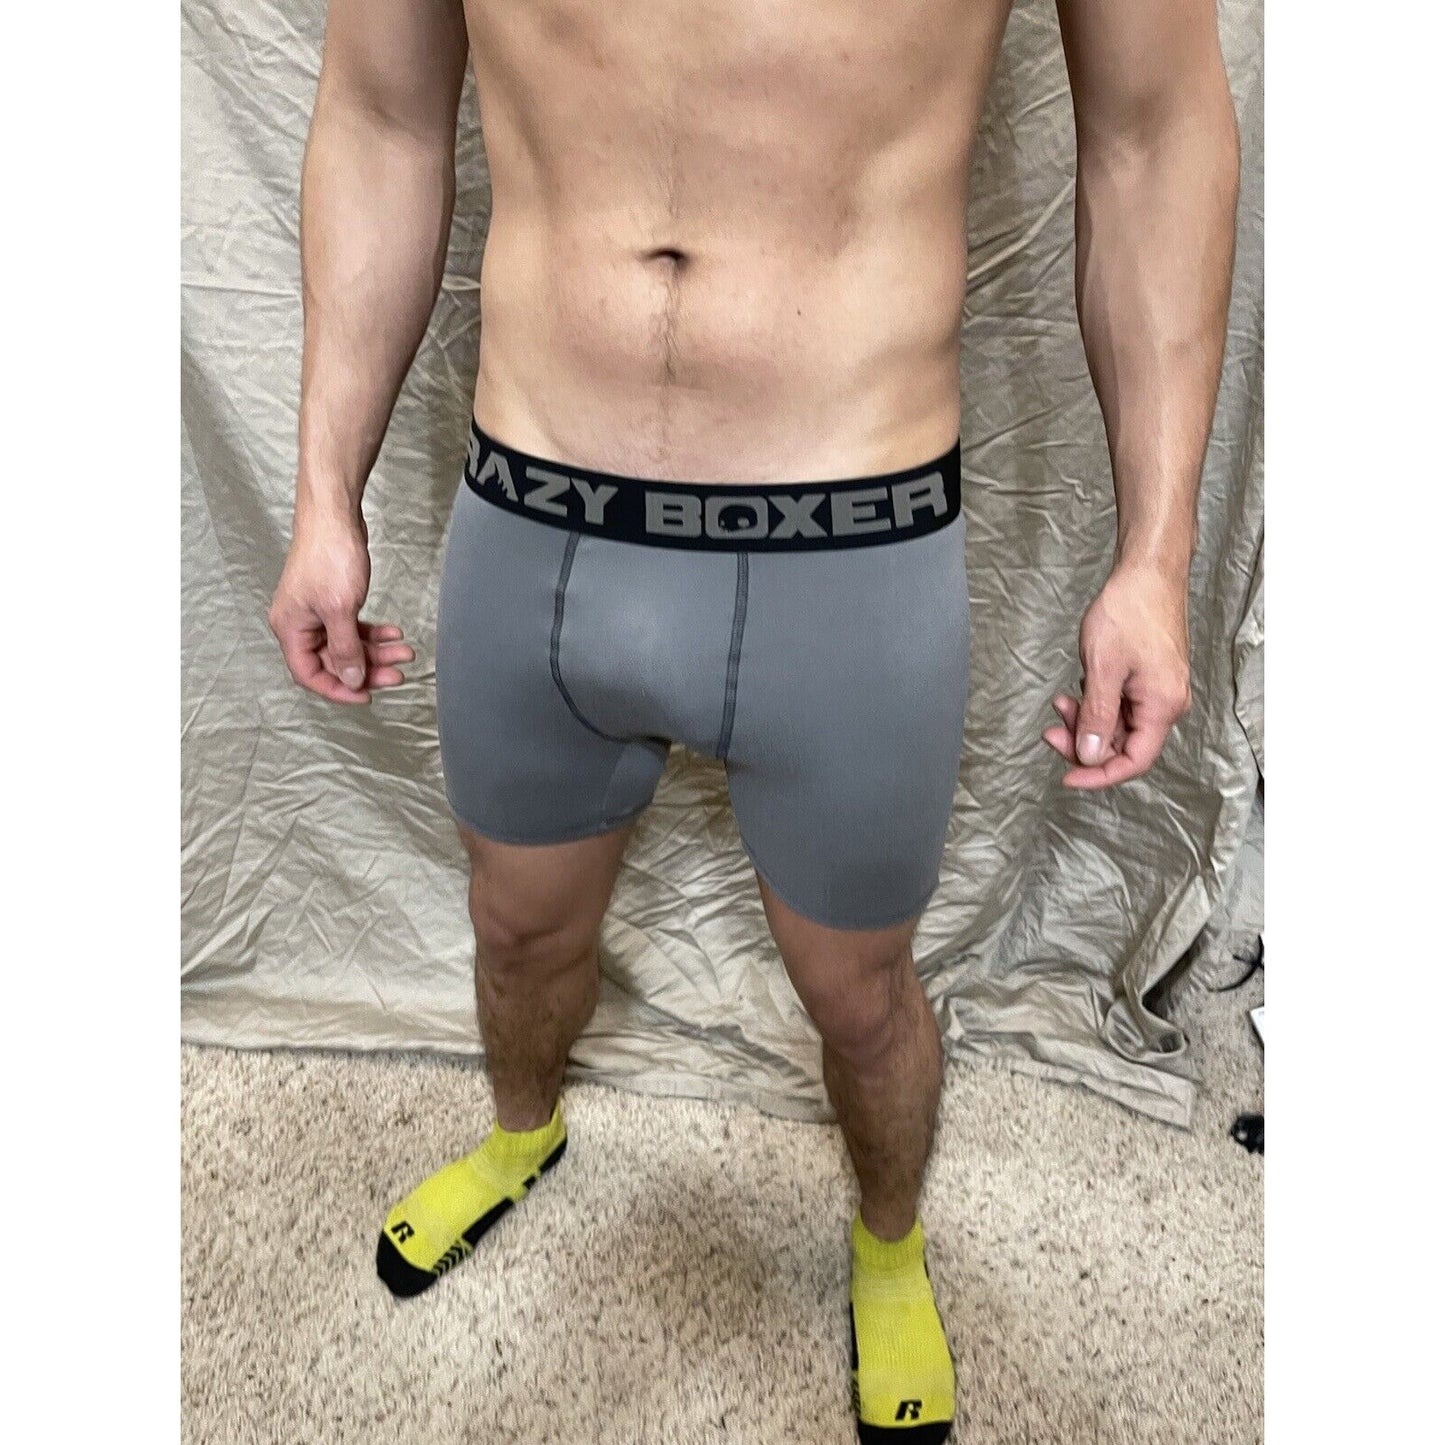 Men's XL crazy boxer gray toy story boxer brief